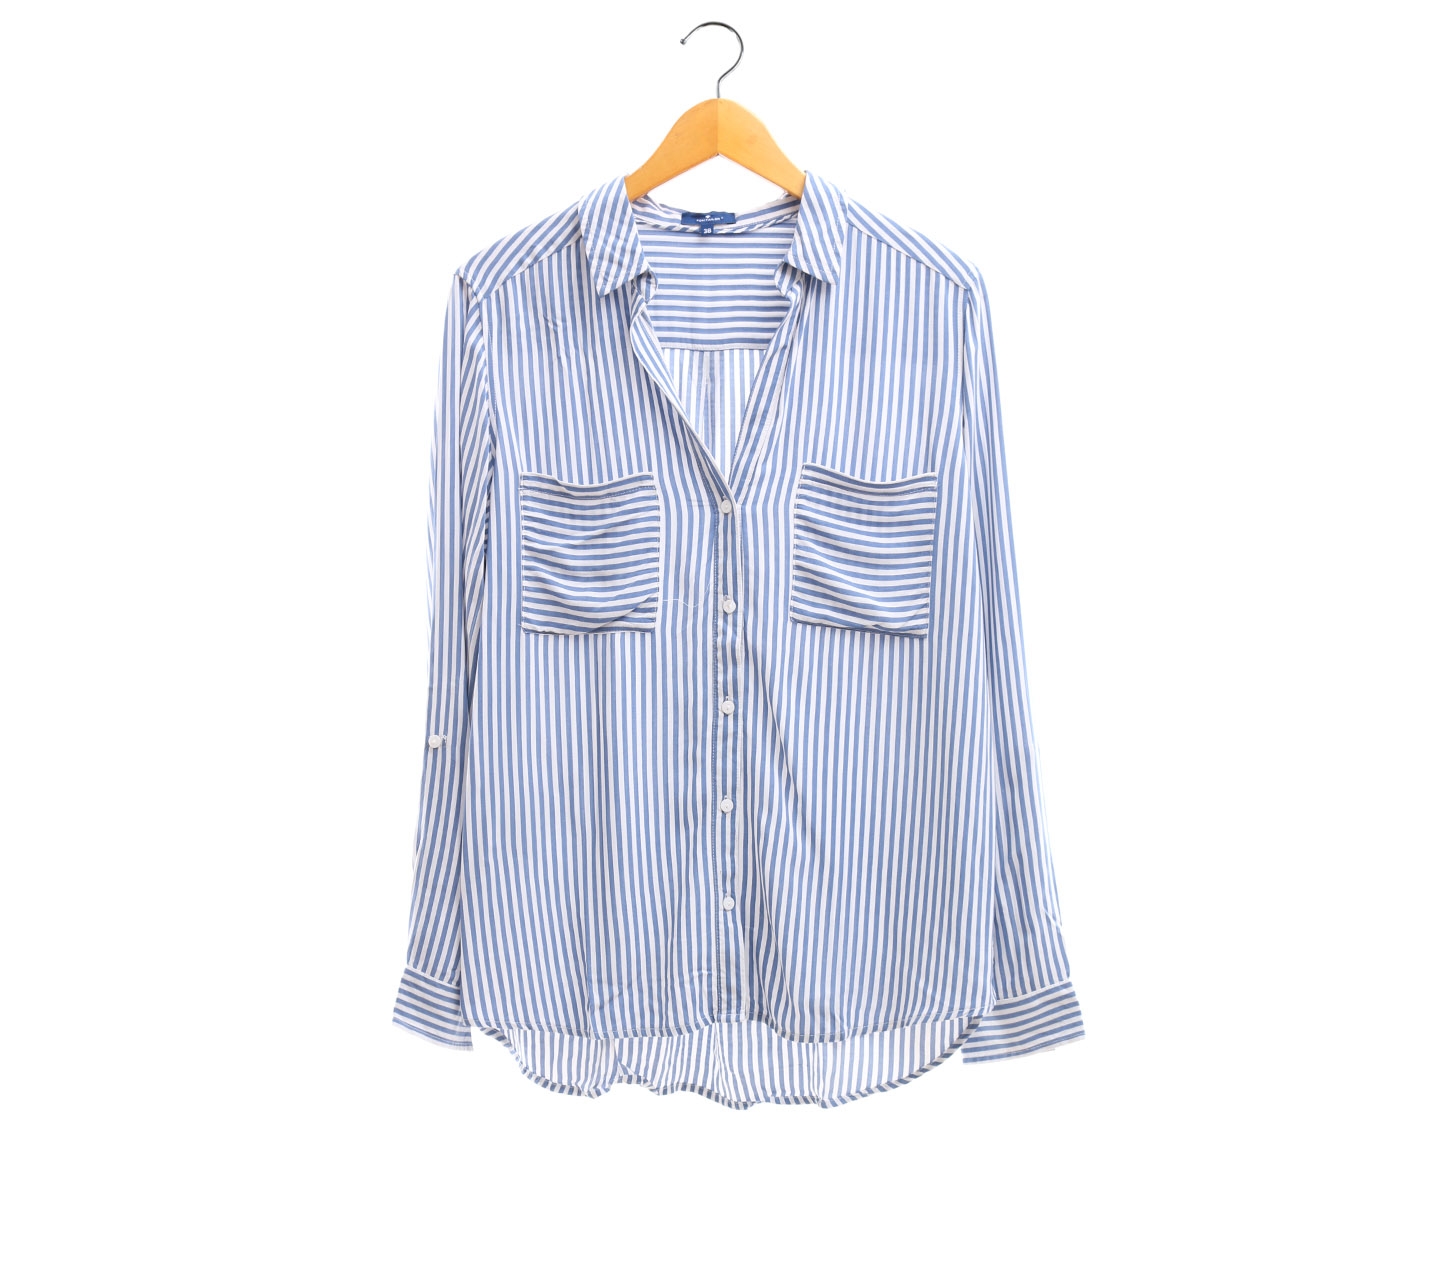 Tom tailor Blue & White Striped Shirt